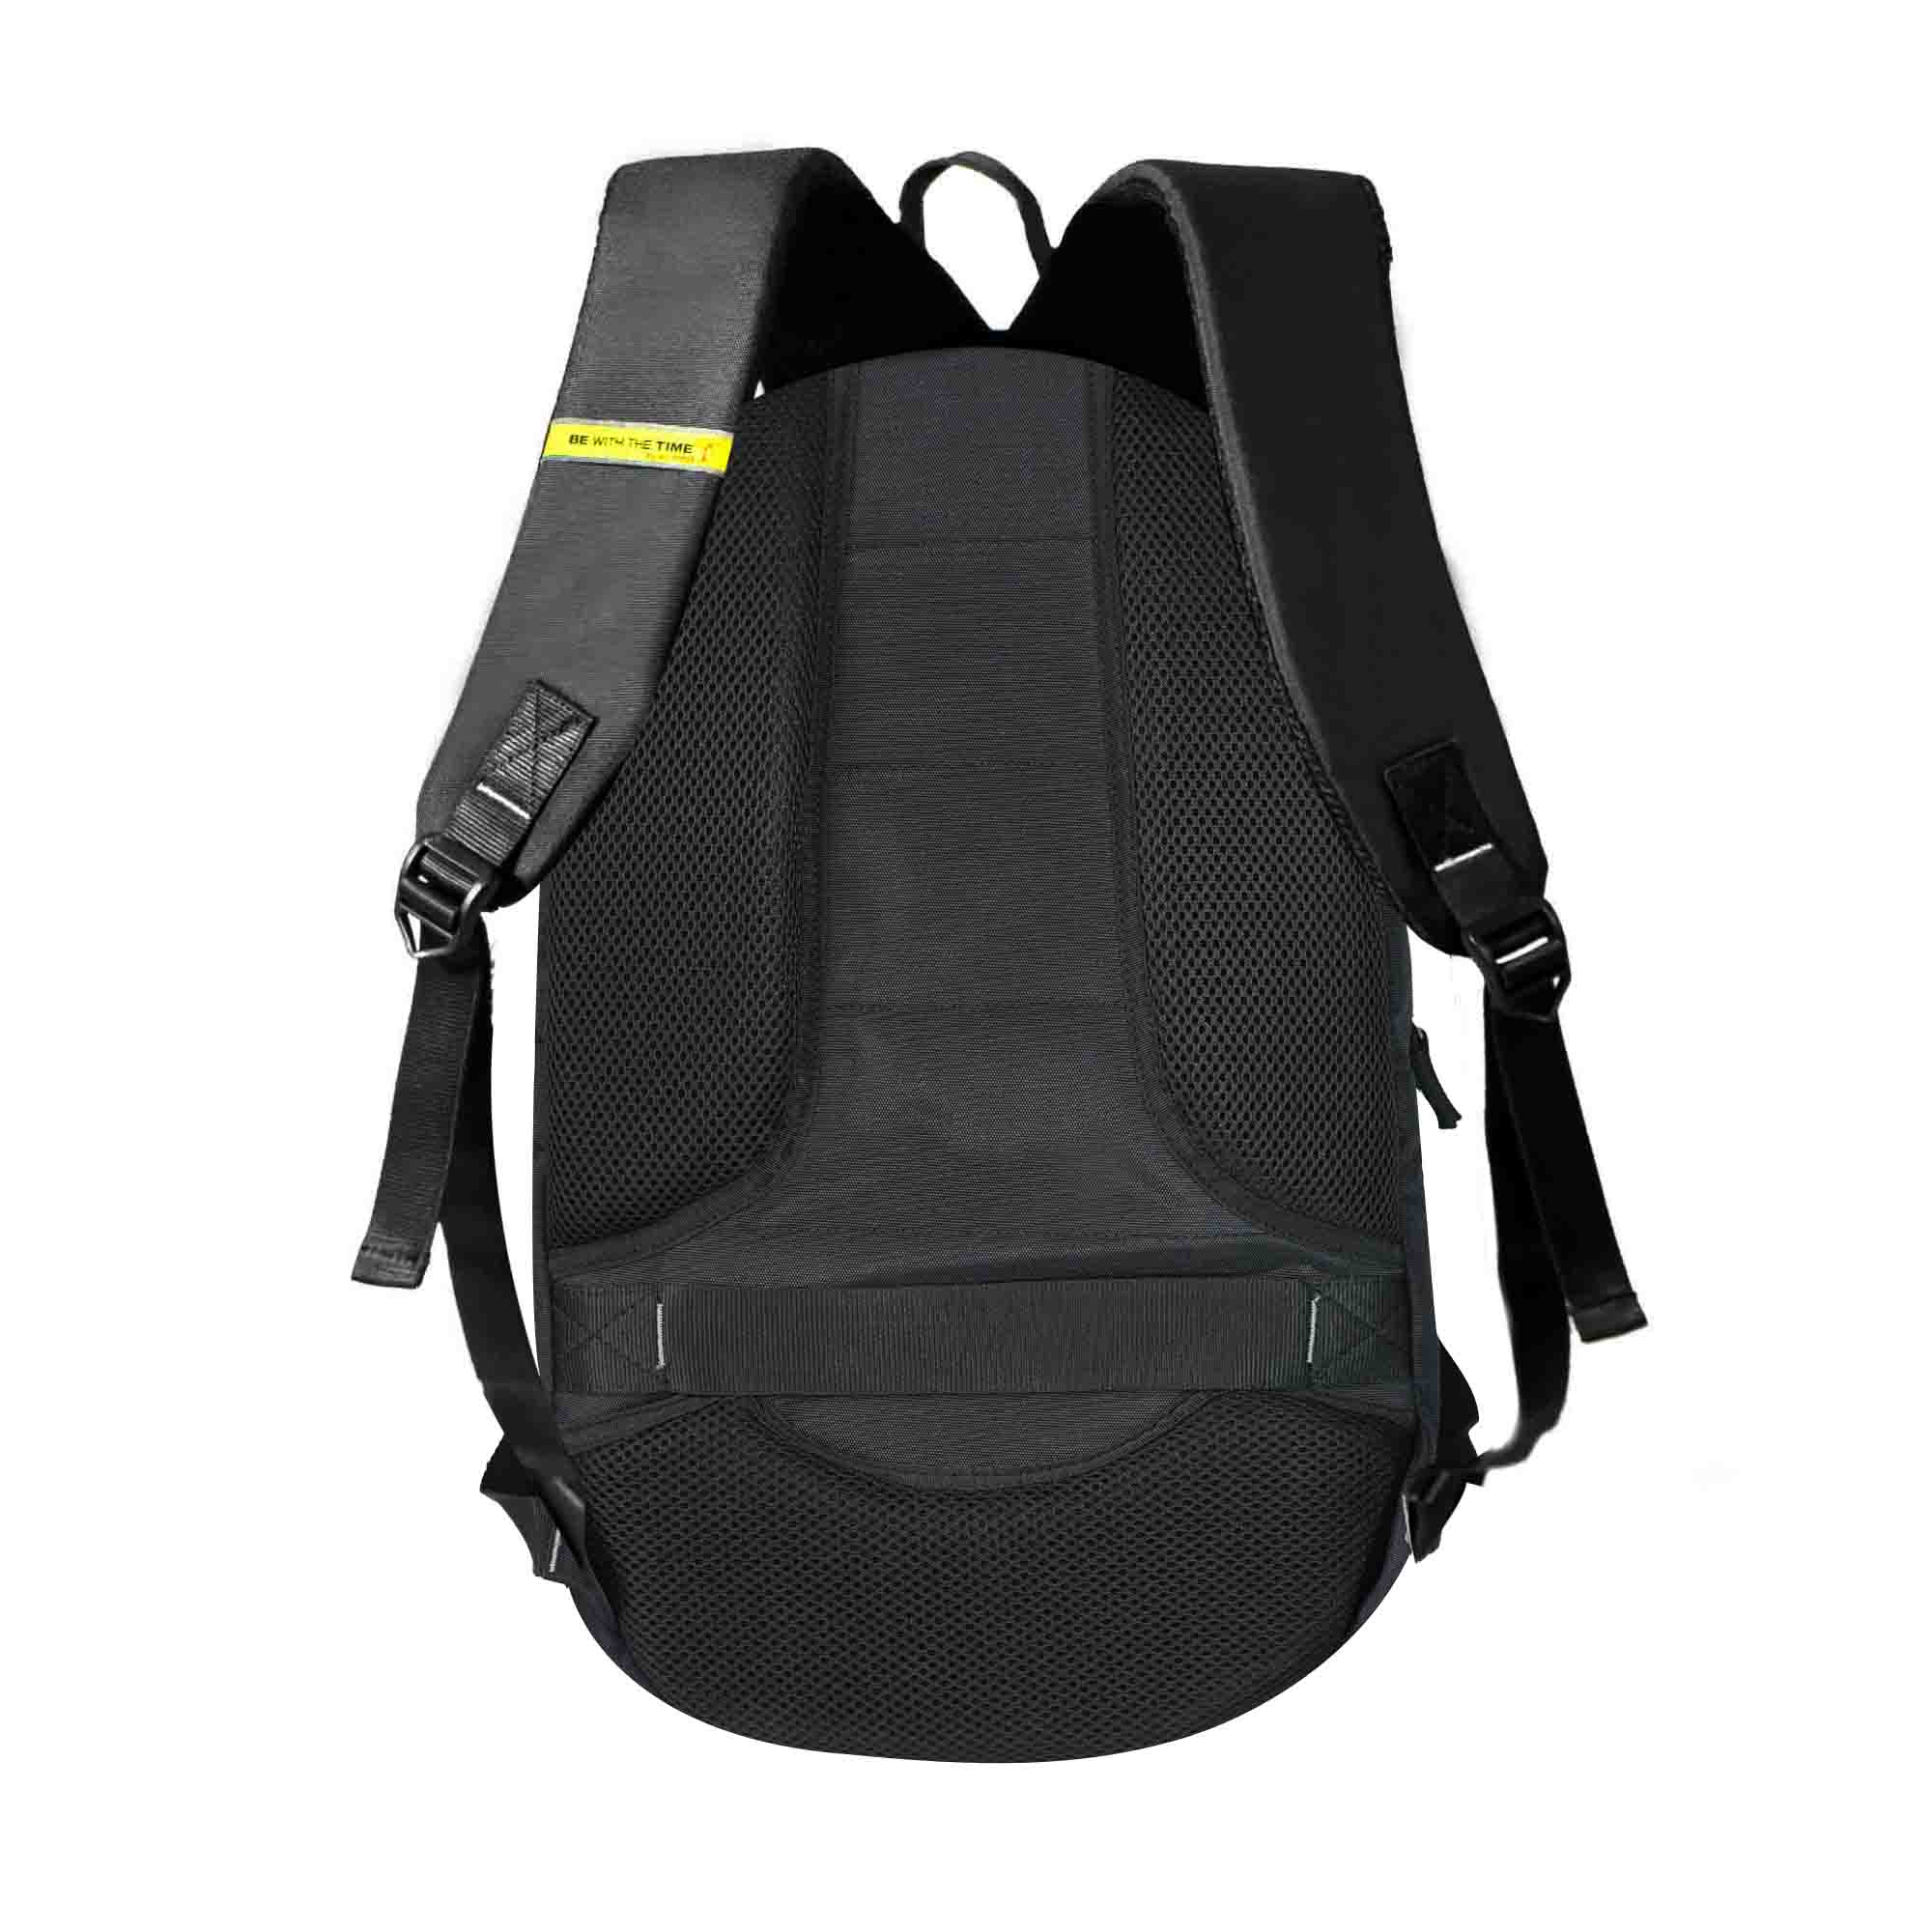 Timus-Lifestyle-backpacks-casual-backpacks-here-i-am-black-5